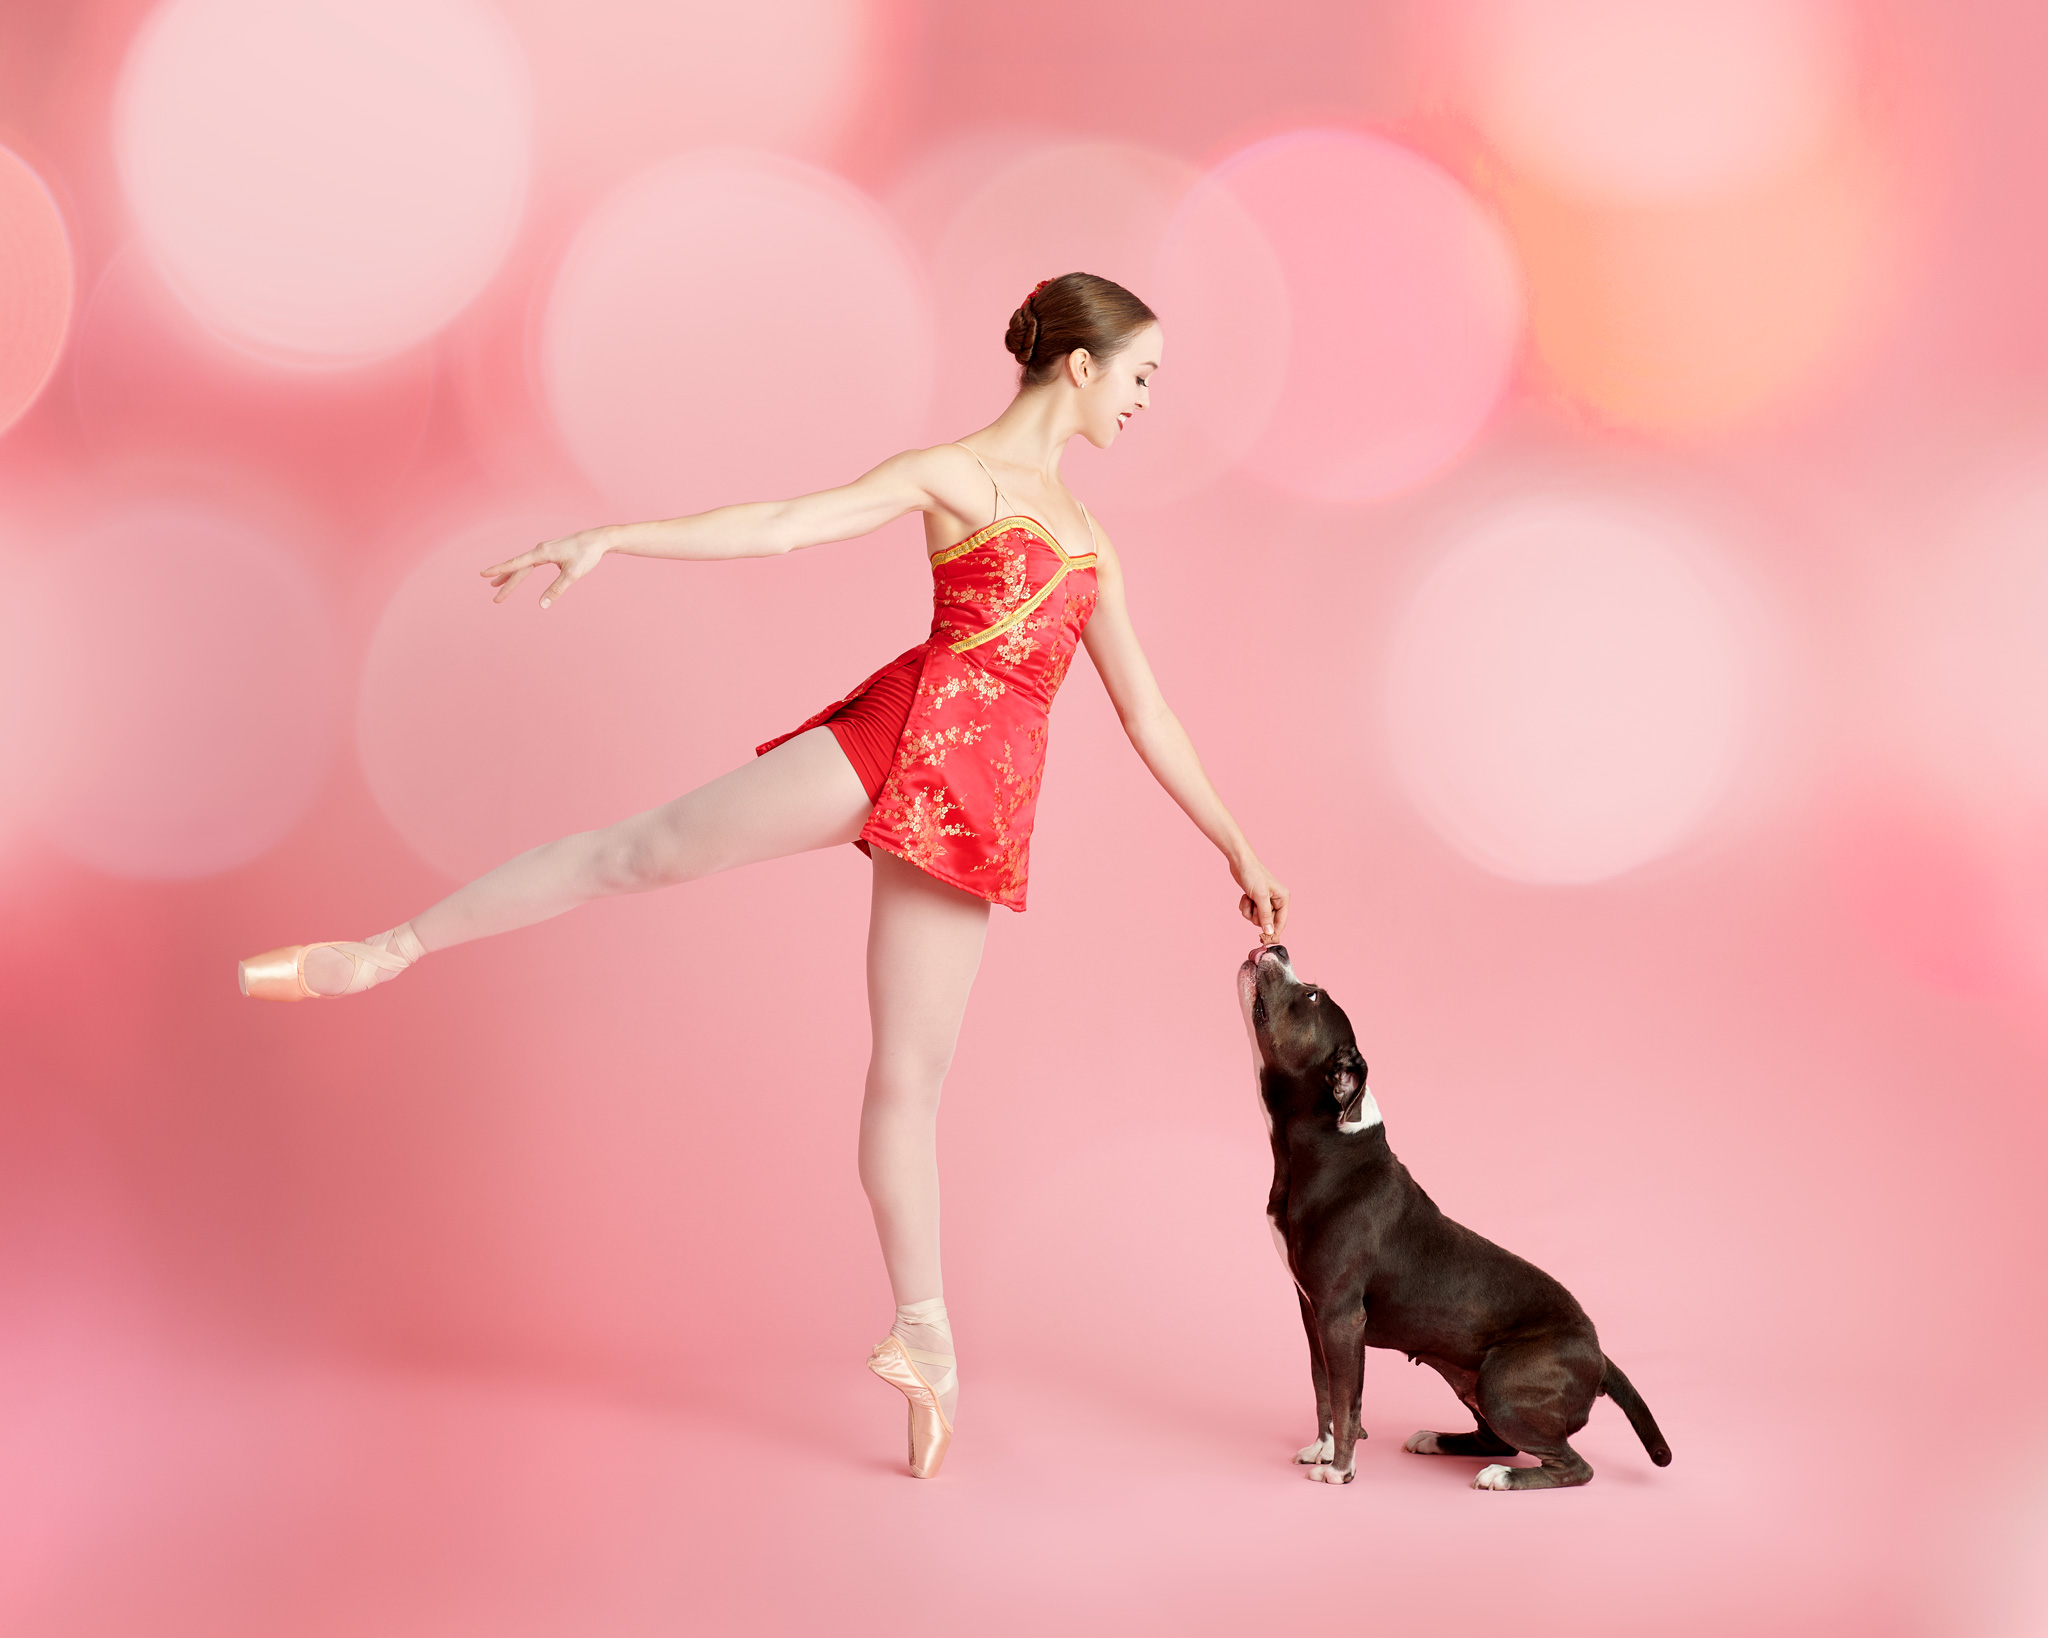 “Muttcracker” Portraits Star Adorable Shelter Pets Alongside Ballerinas